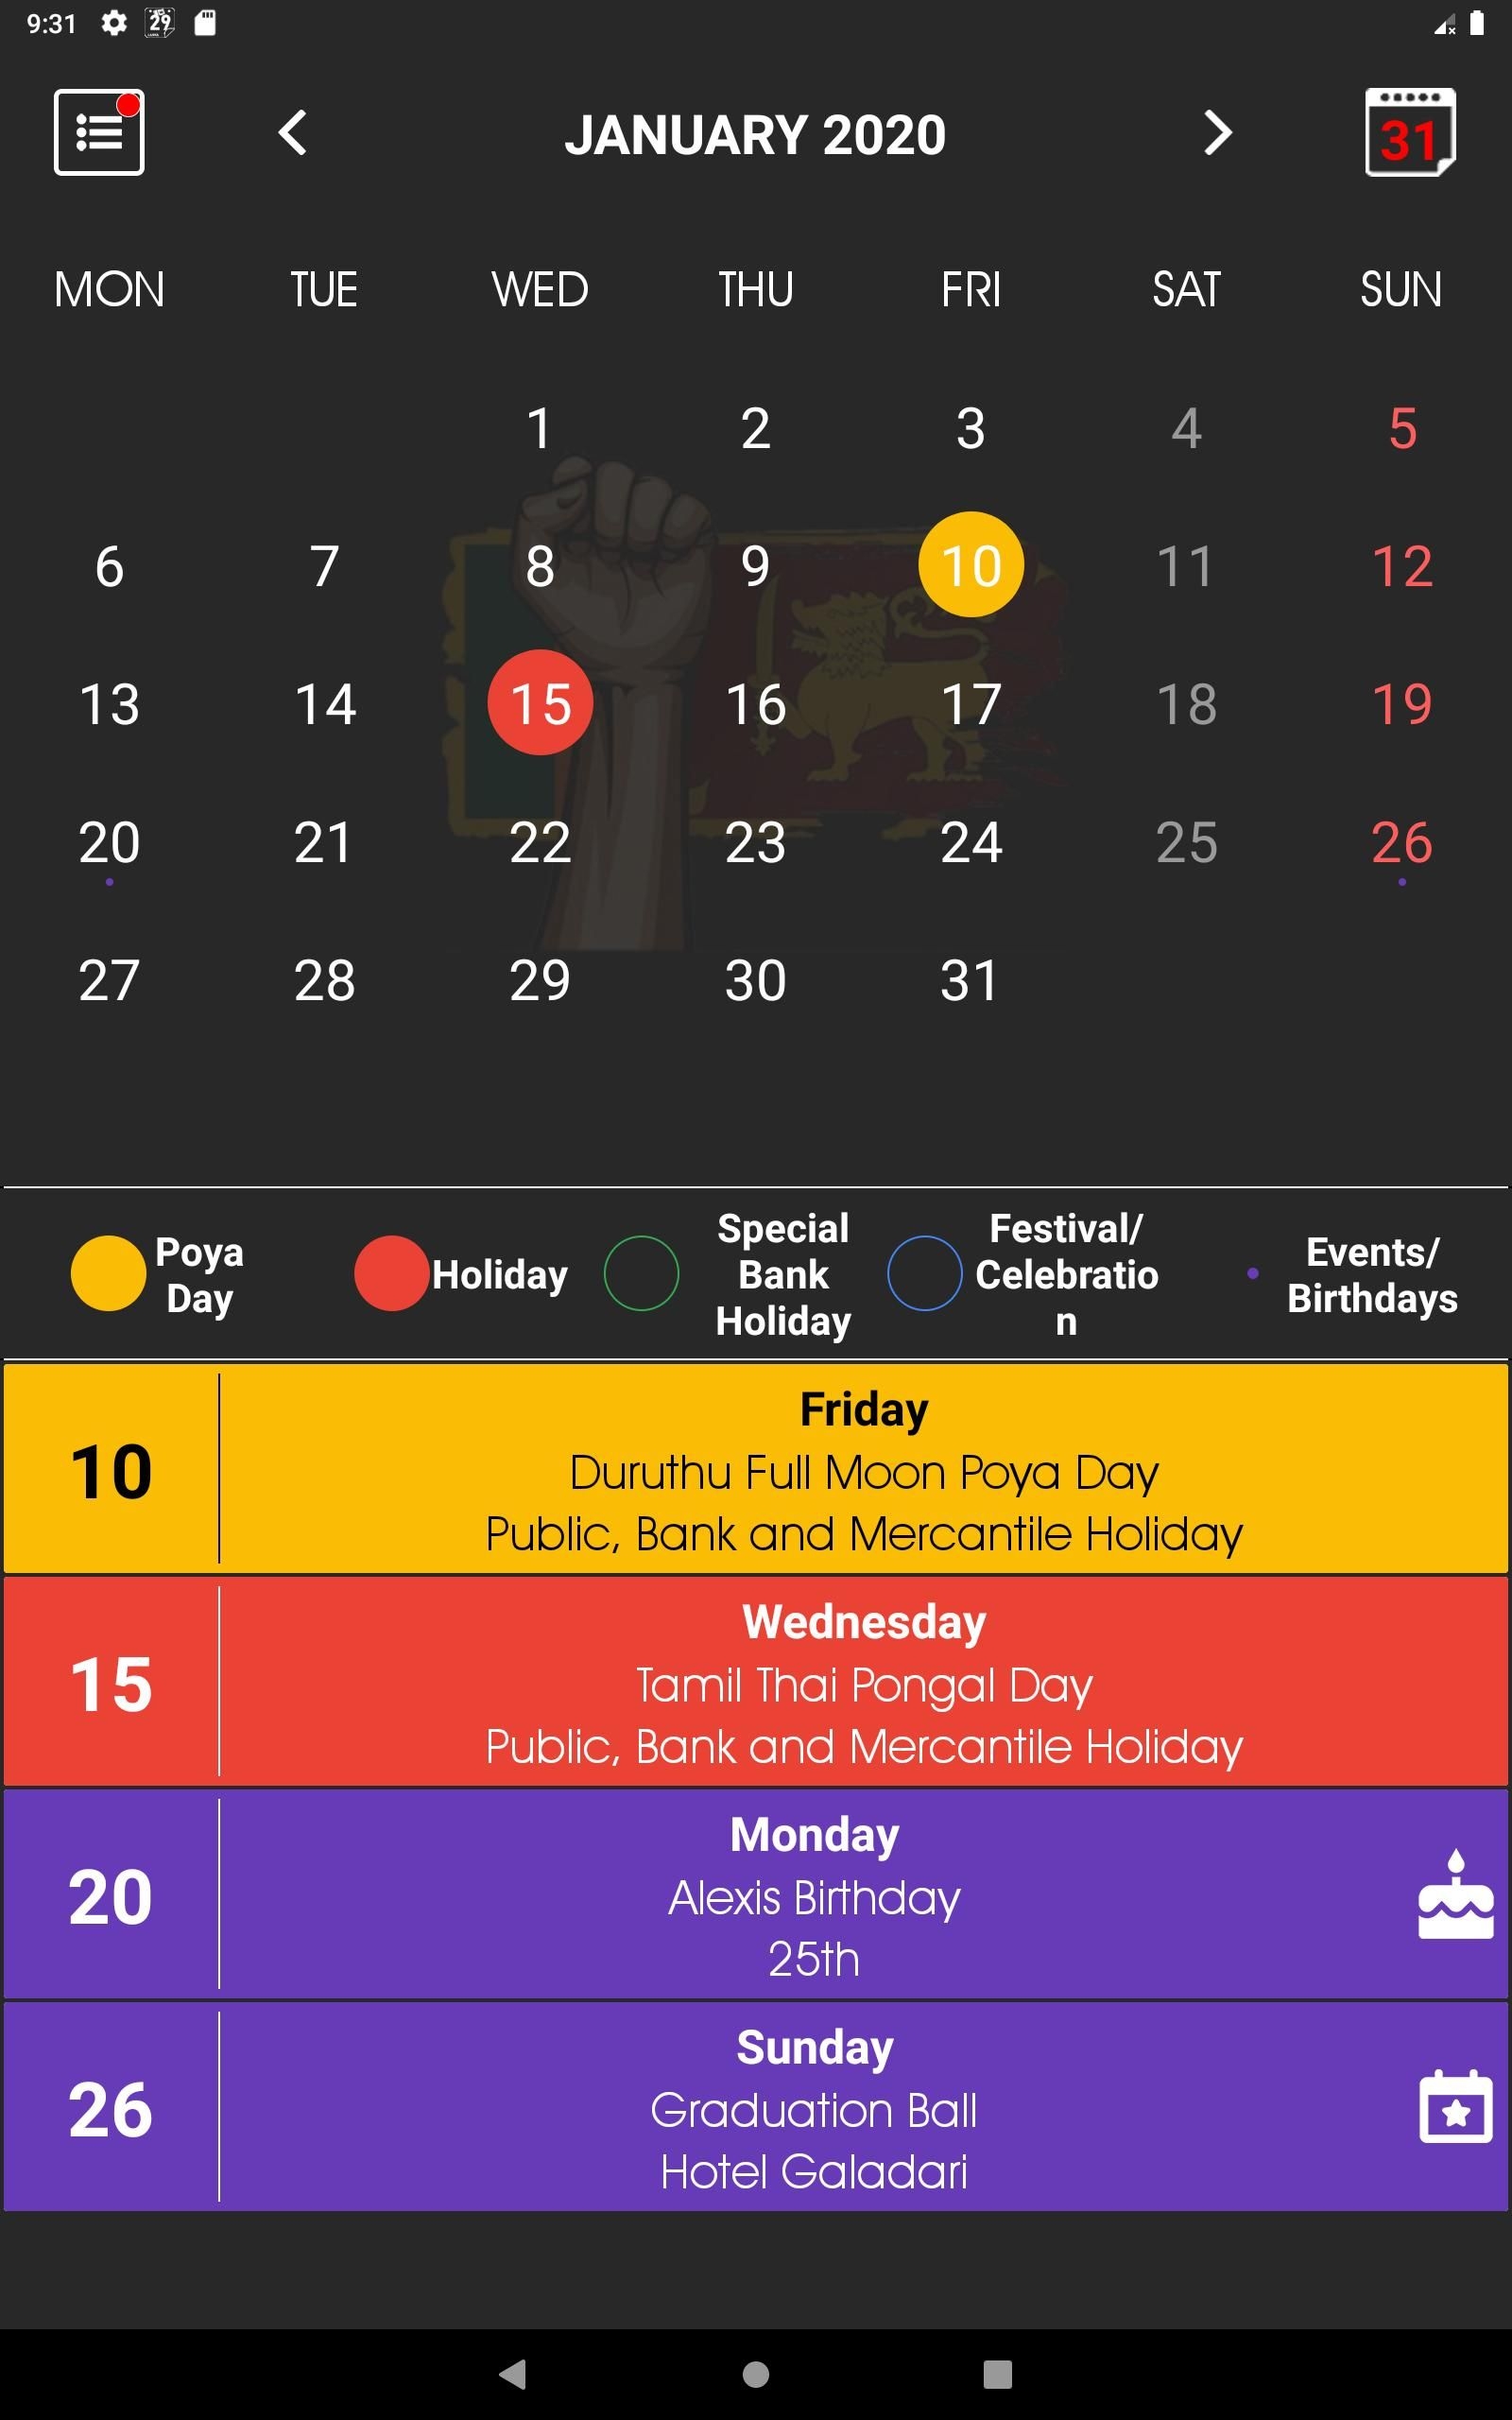 sri lanka calendar 2020 🇱🇰 ¦ sinhala ¦ holidays for